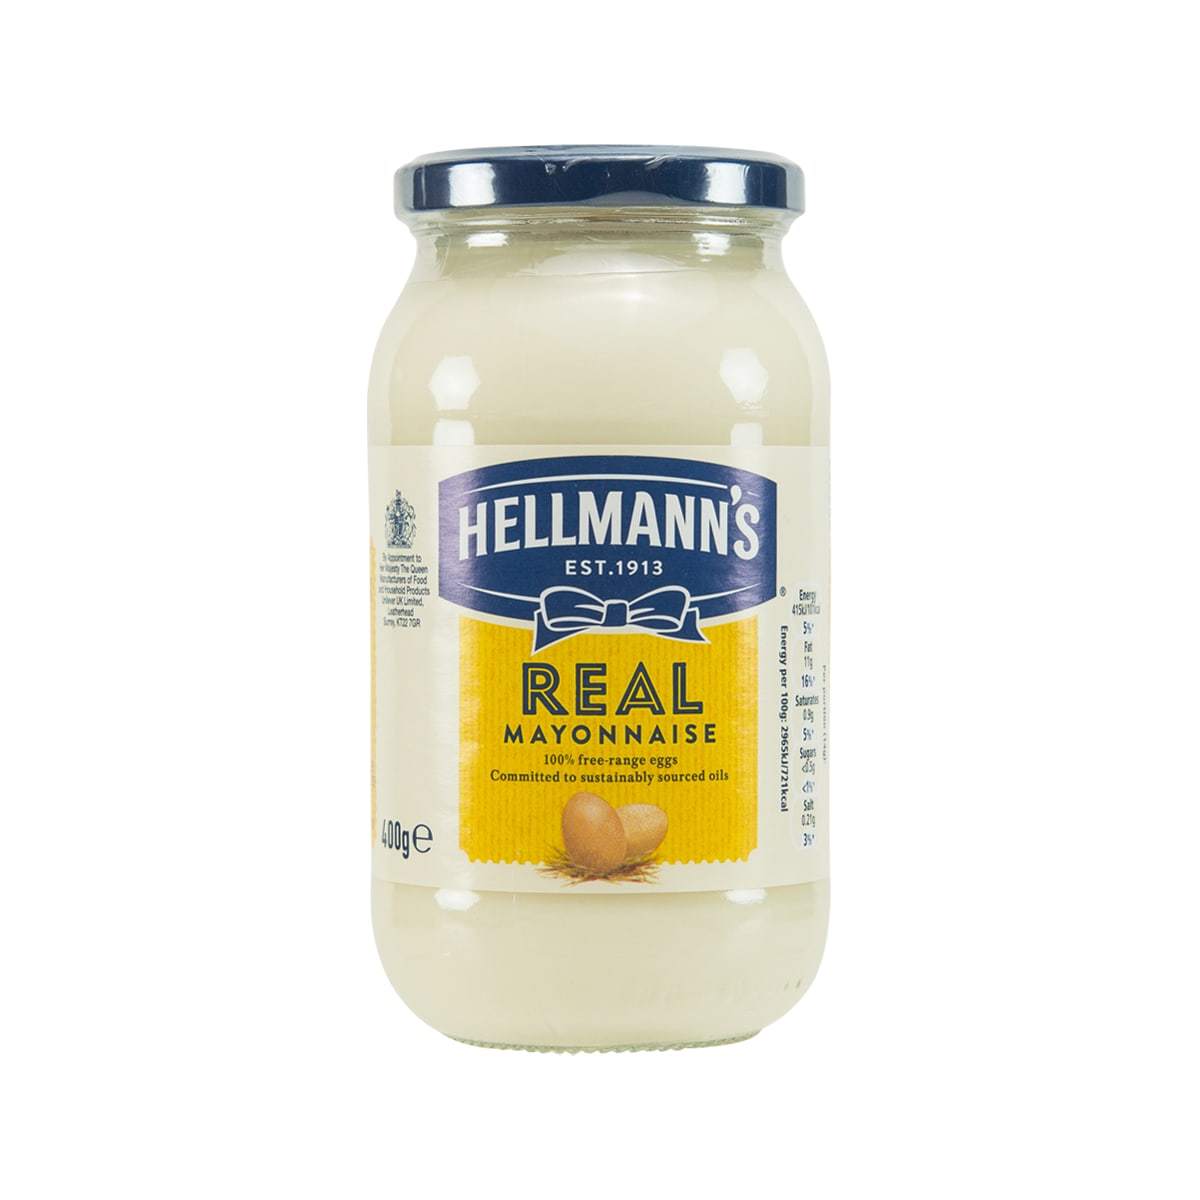 Hellmann's Real Mayonnaise 400g เฮลแมนส์ เรียล มายองเนส ขนาด 400 กรัม (1064)